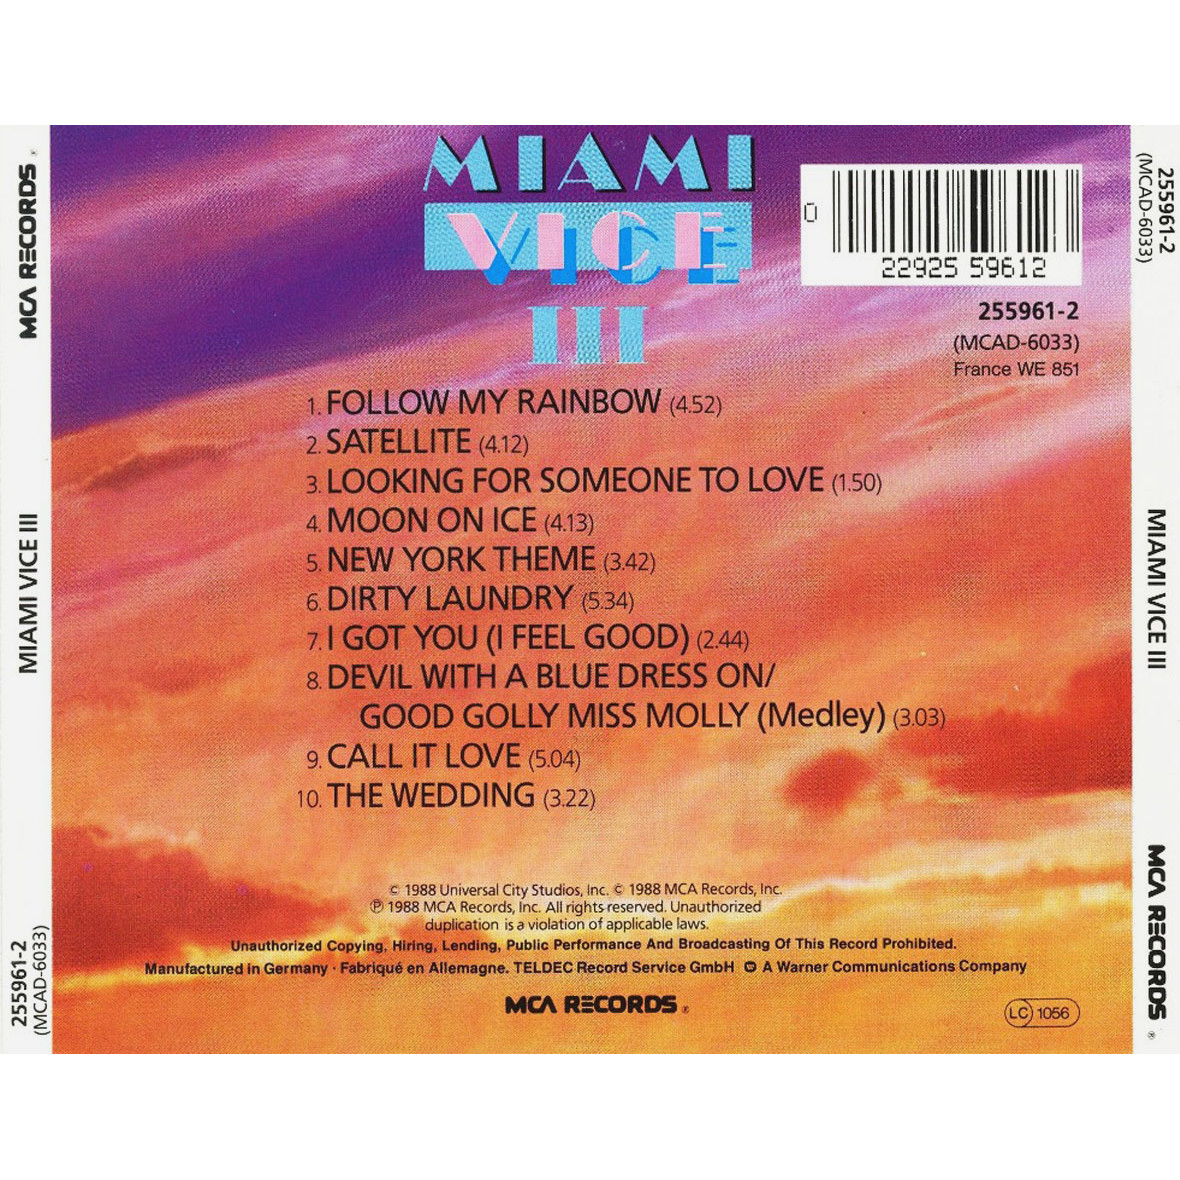 Vice soundtrack. Miami vice Soundtrack.